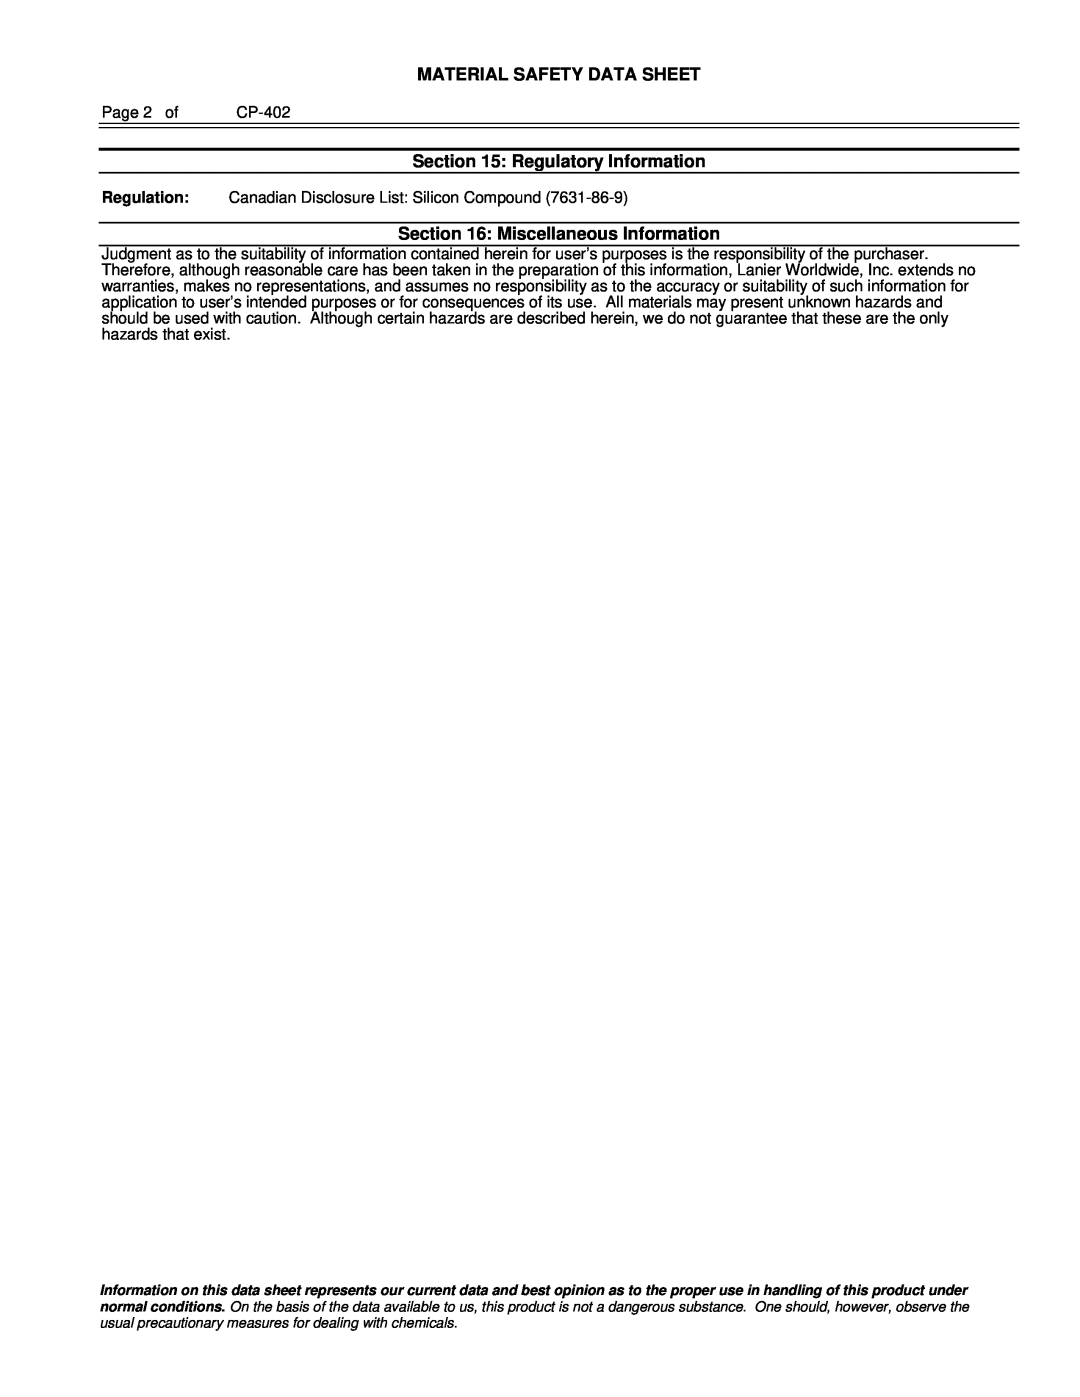 Lanier 480-0083 manual Material Safety Data Sheet, Regulatory Information, Miscellaneous Information 